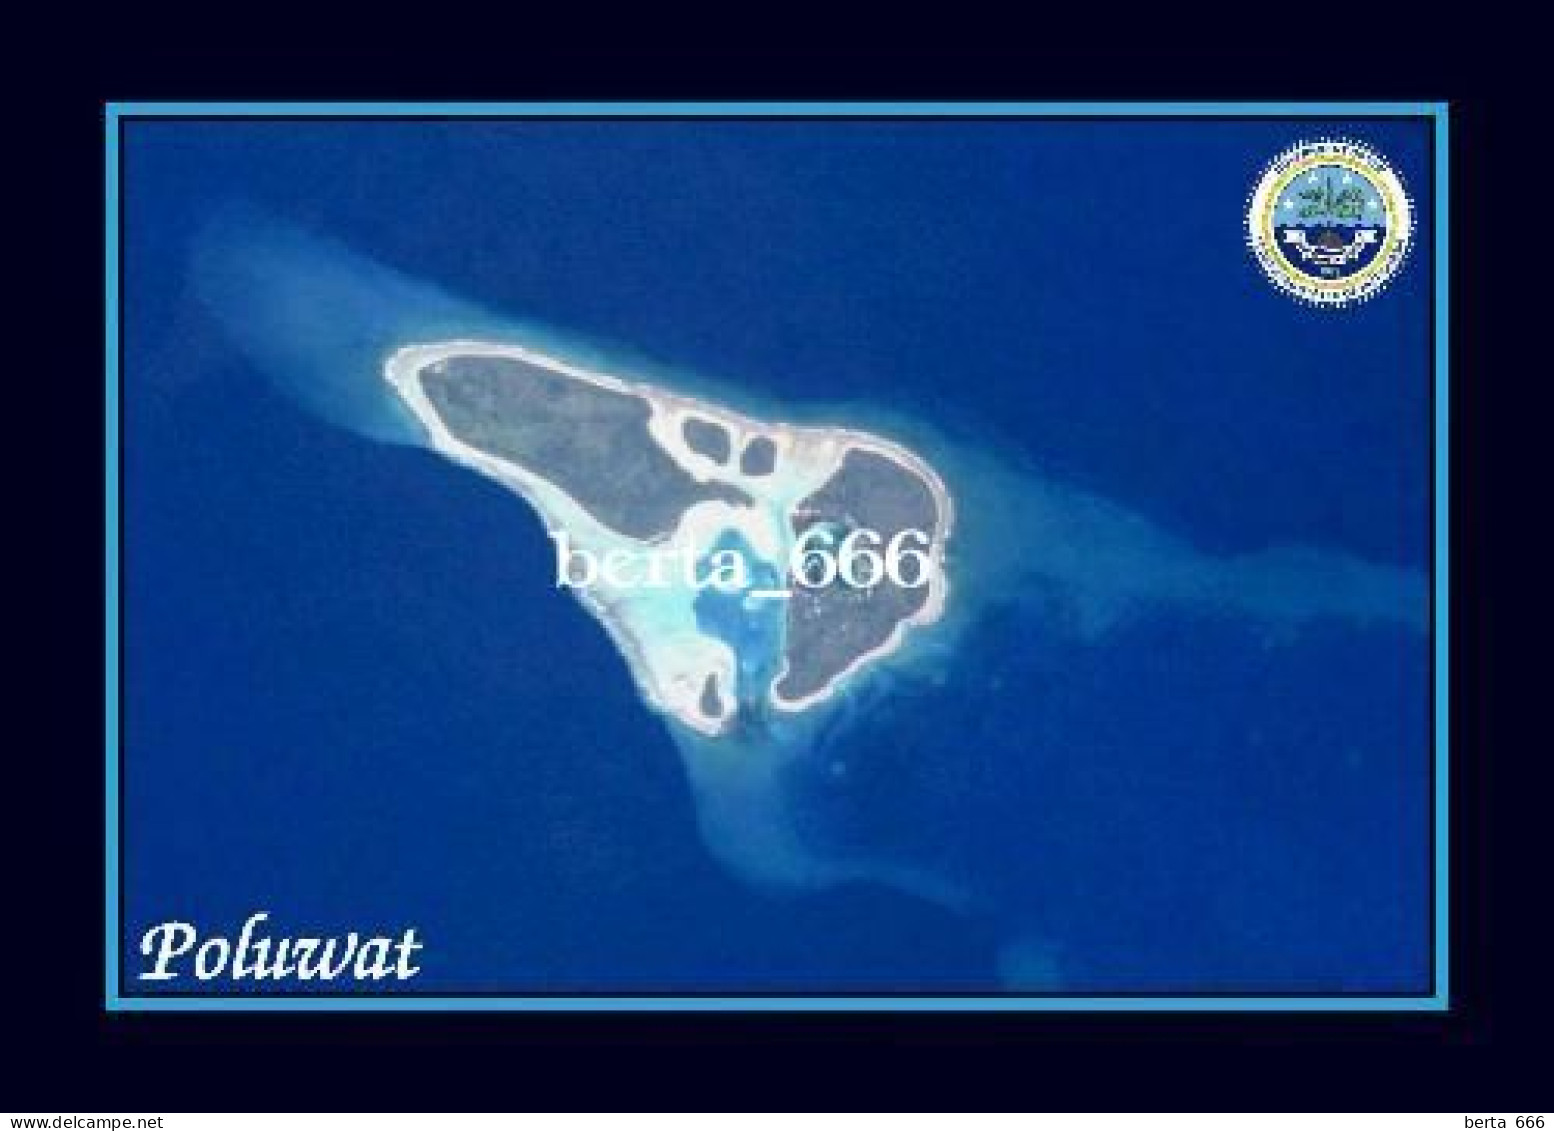 Micronesia Caroline Islands Poluwat Atoll New Postcard - Micronesia